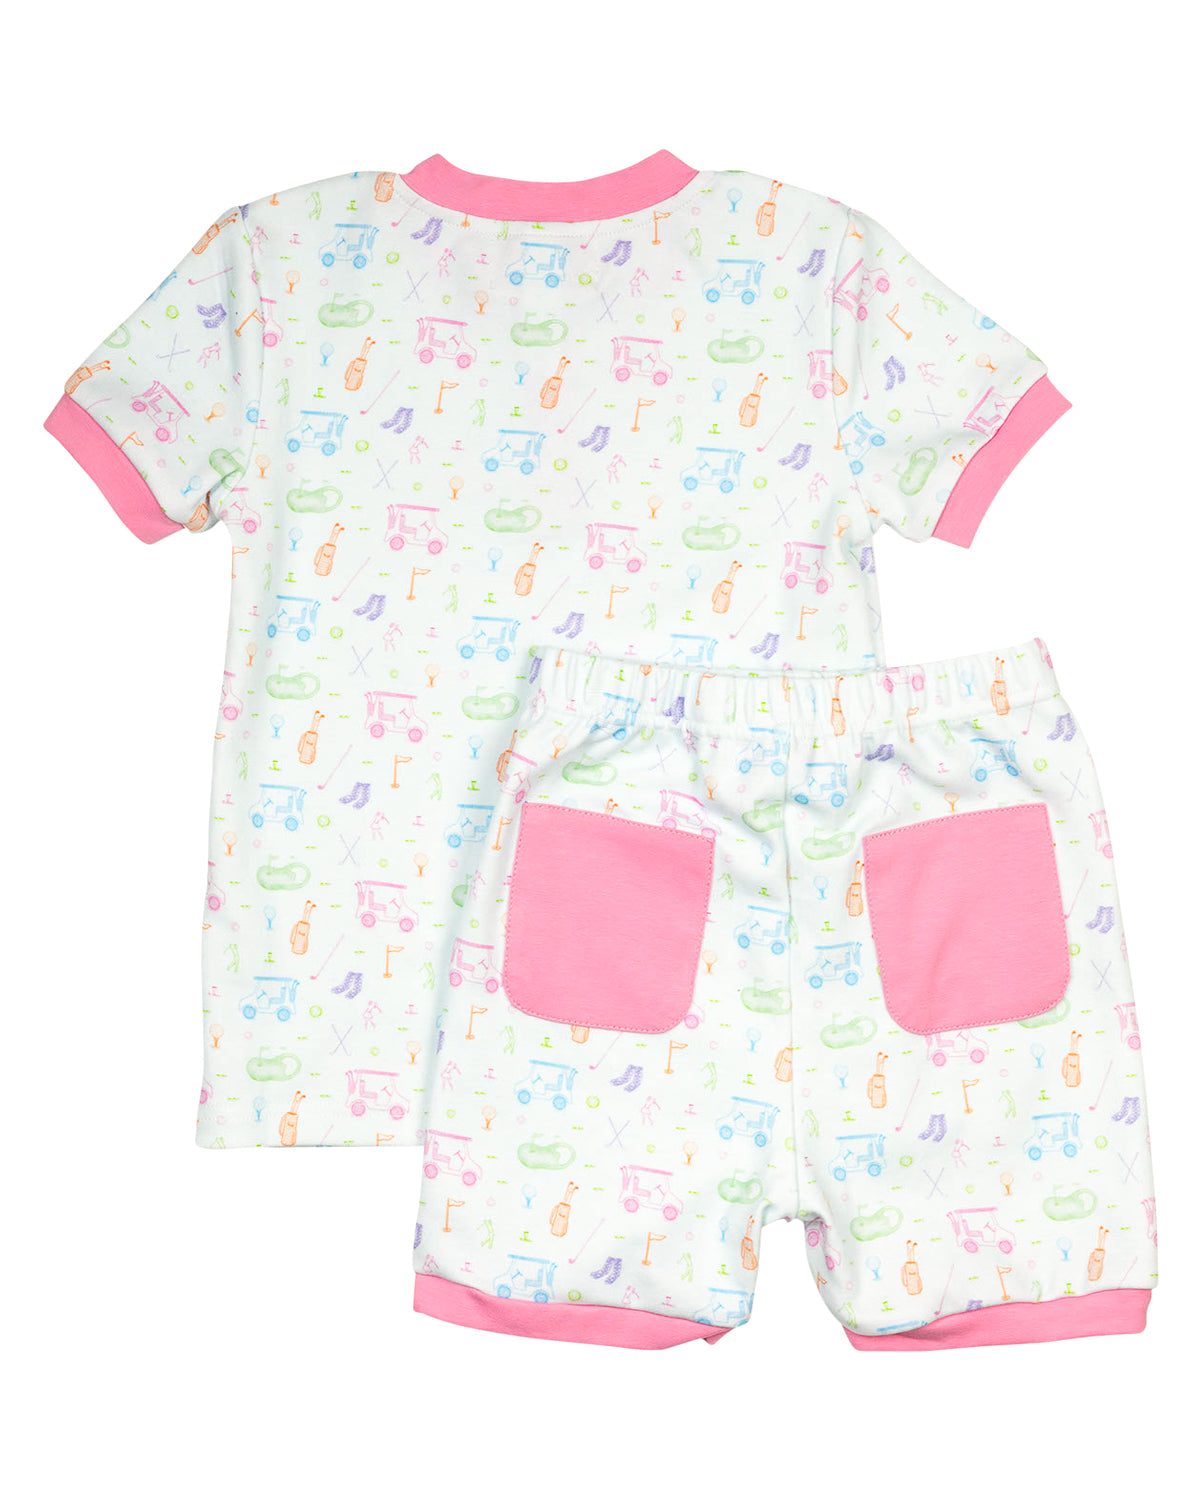 Fairway Fun Short Sleeve Pajama Set with Pink Trim